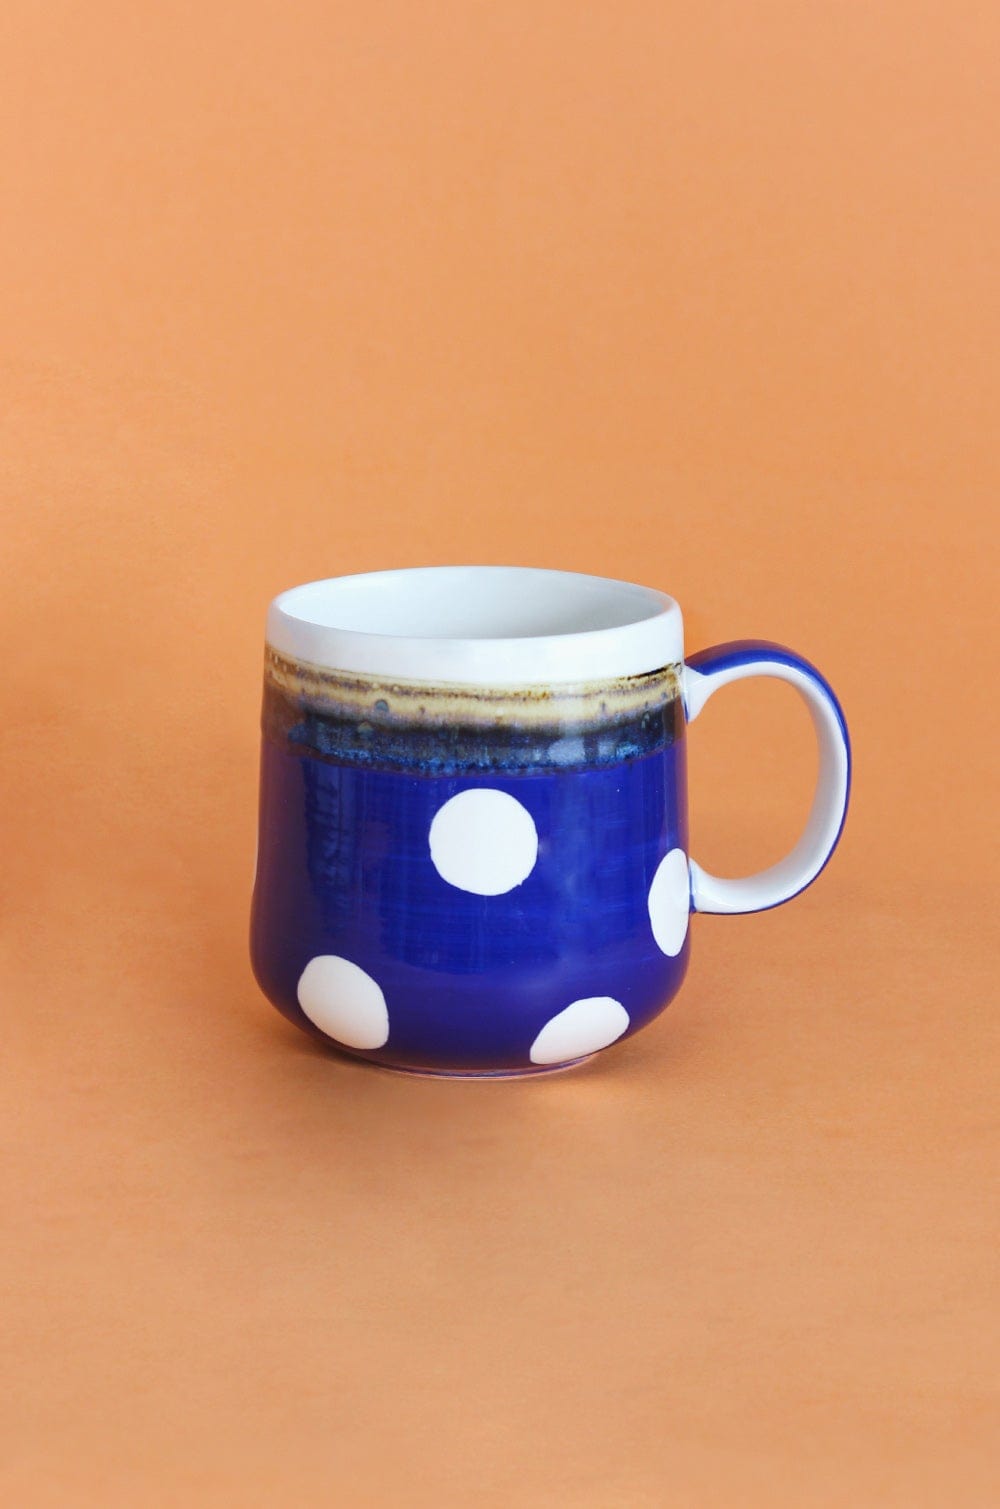 Lottie Dottie Handpainted Ceramic Mugs - Set of 2